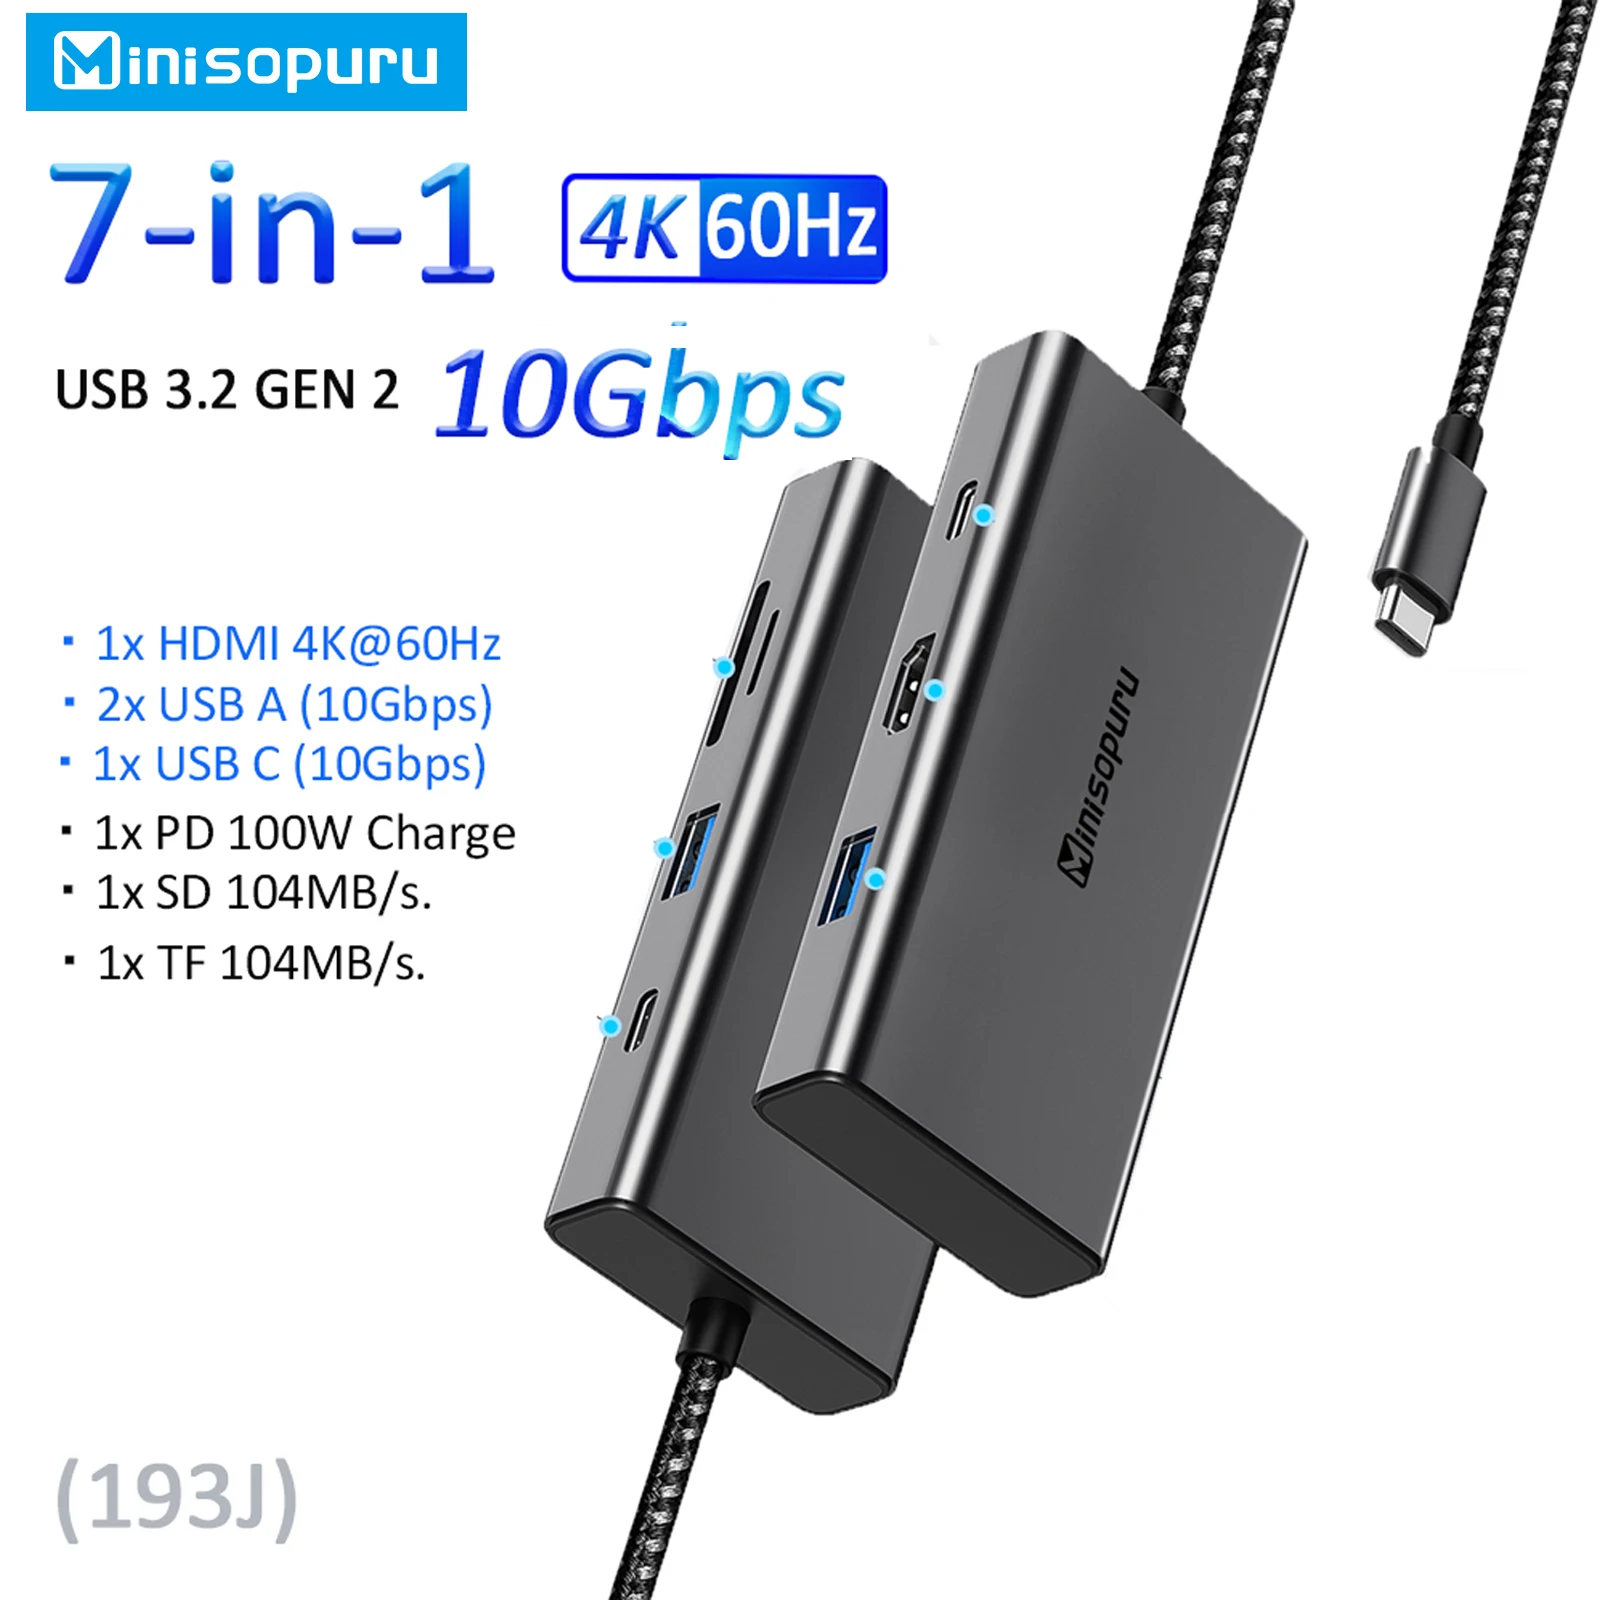 

Minisopuru USB C Hub 4K HDMI Type C to multiport USB 3.2 PD 100W SD/TF Adaptador for MacBook Pro Air Surface Pro iPad Pro HUB